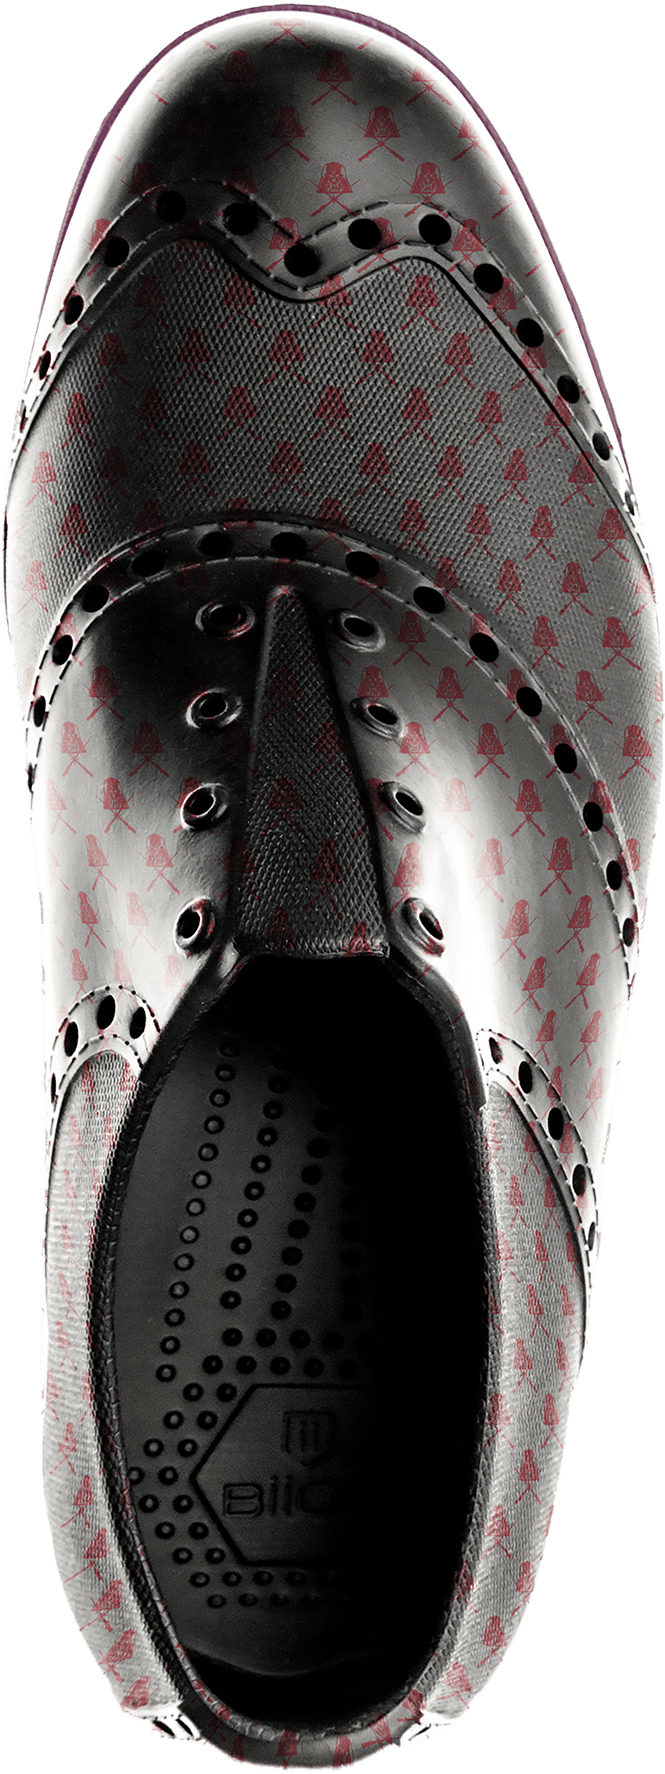 Star Wars Darth Vader Crocs Shoe PNG image